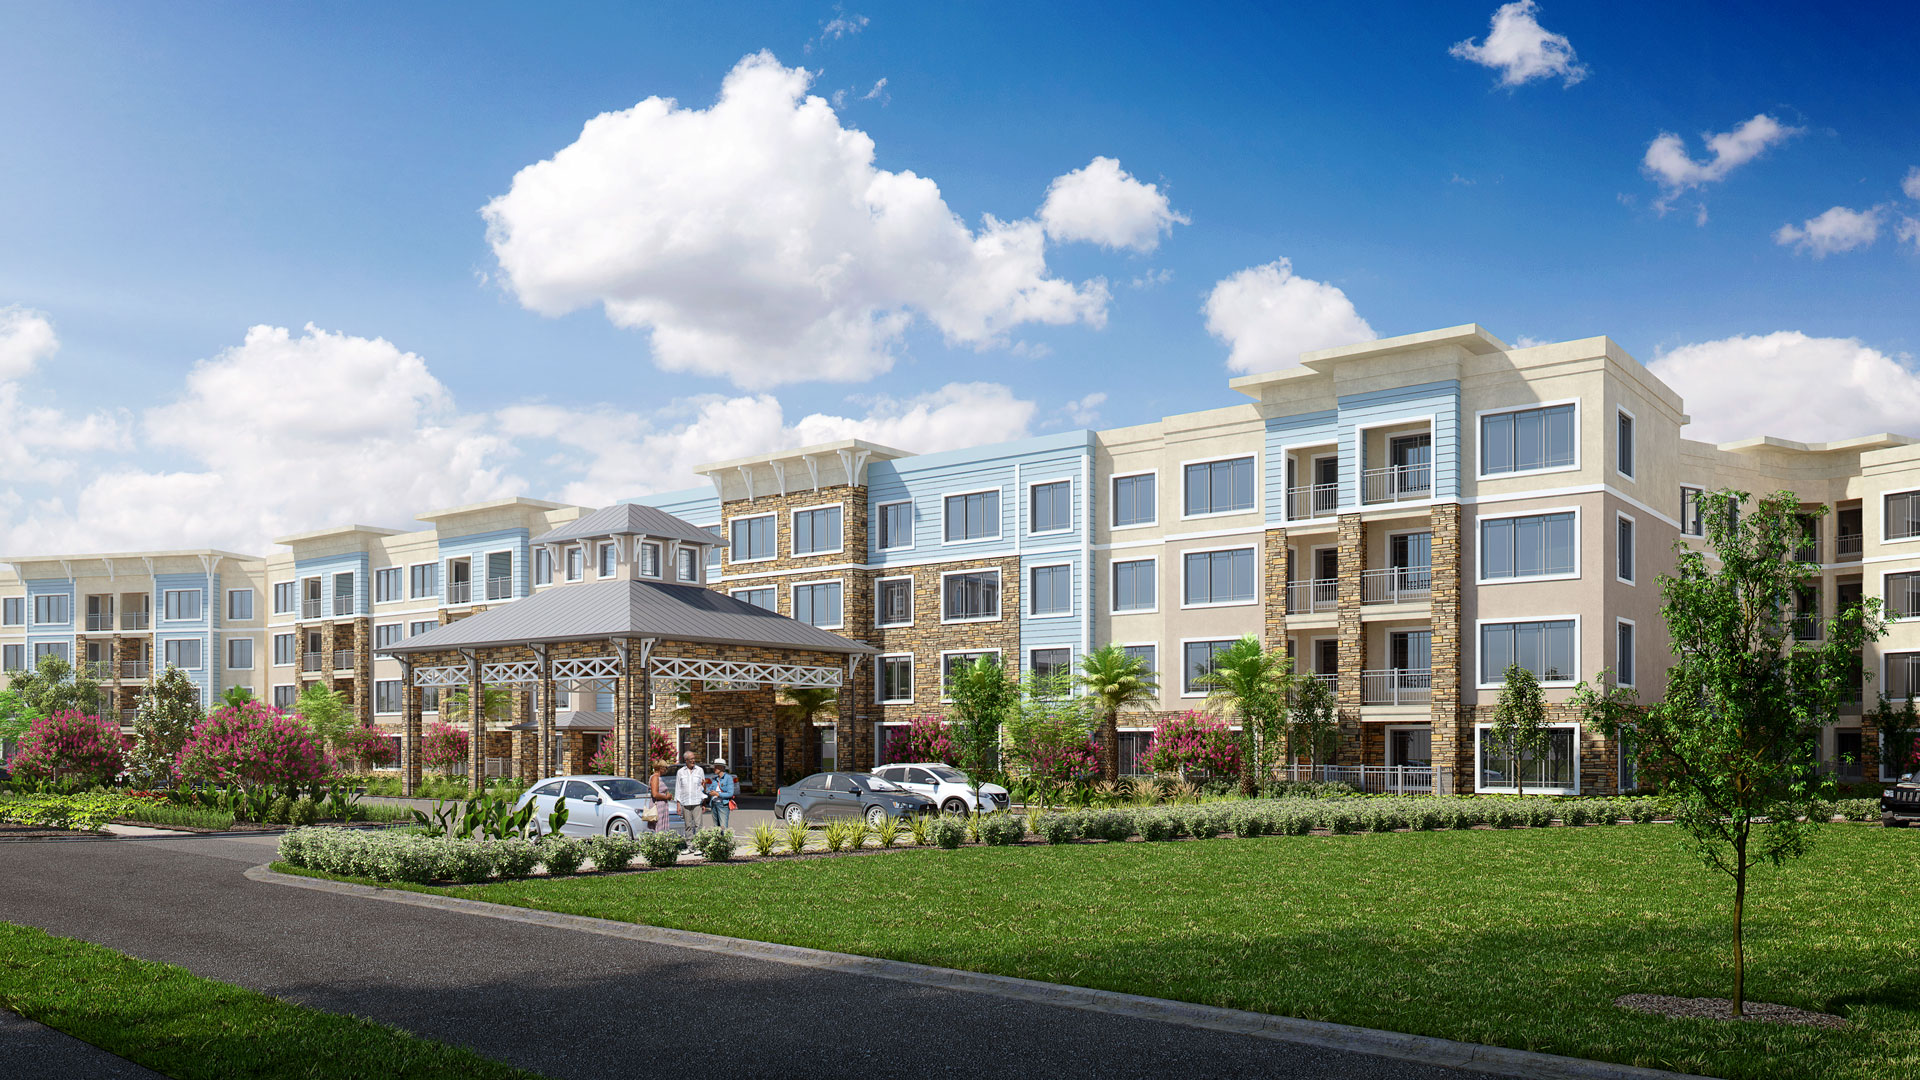 Dominium Announces the Land Closing for New Affordable Senior Housing  Development in Orlando